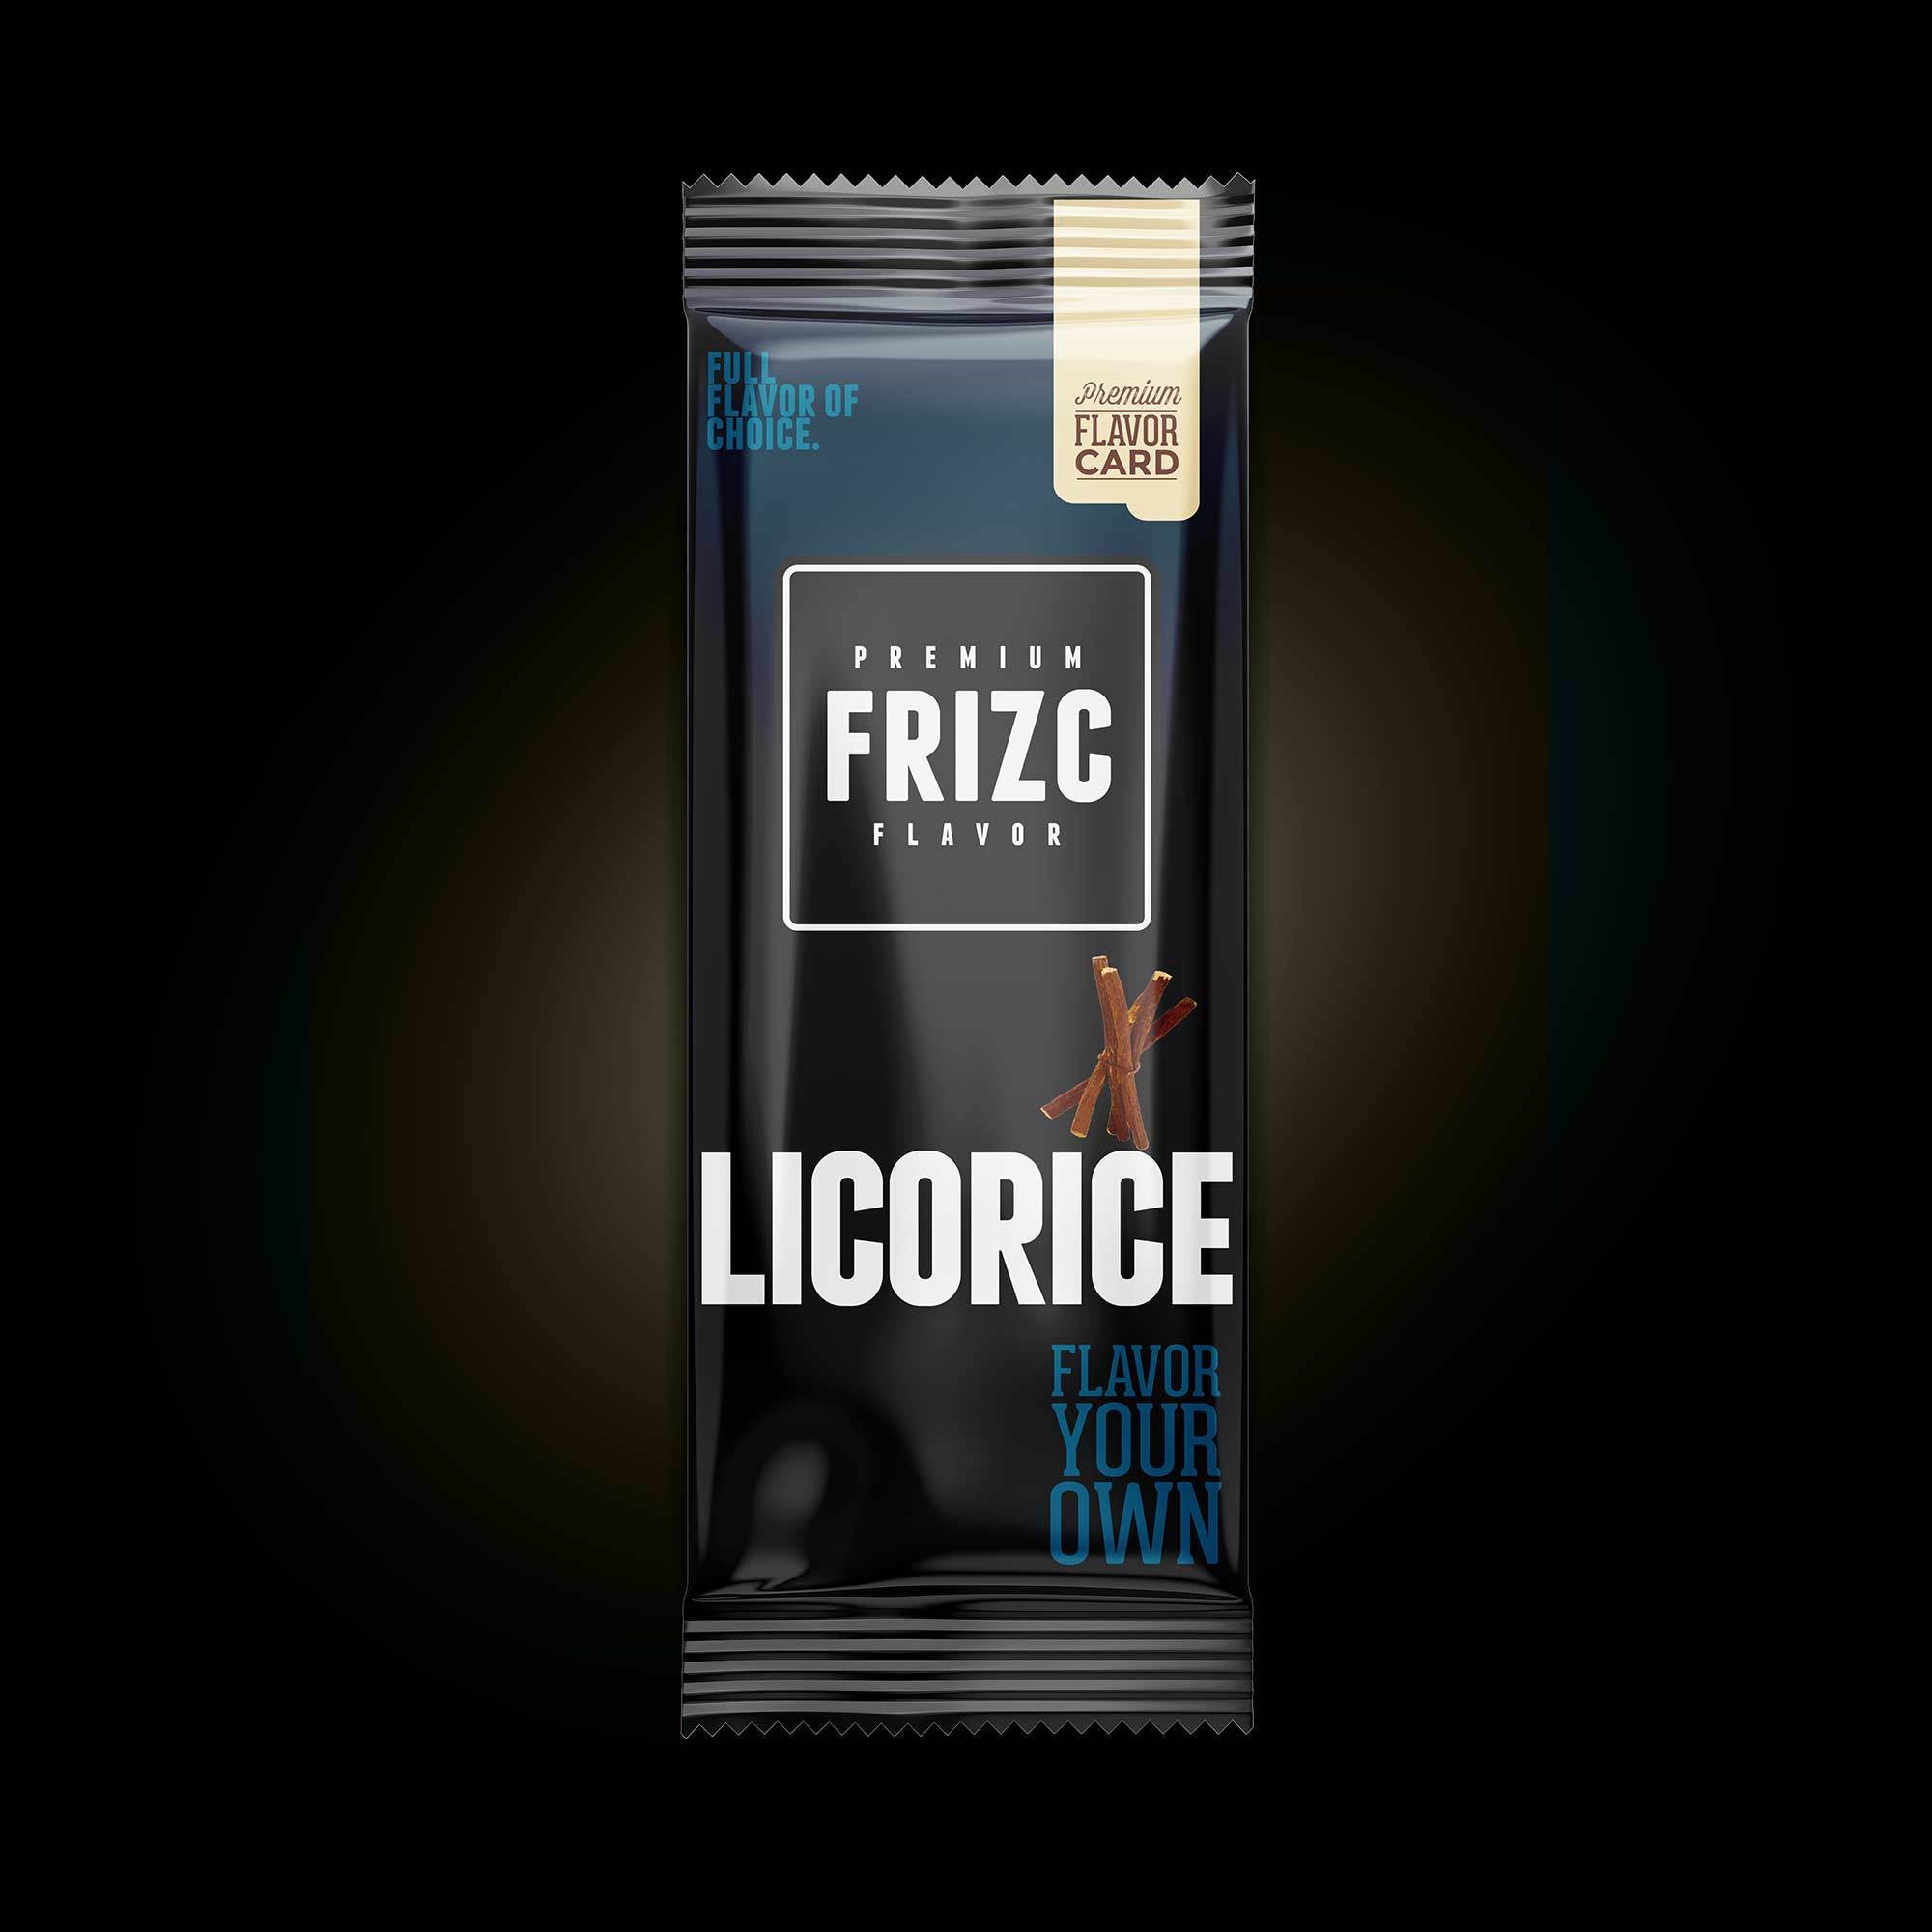 Frizc Licorice 25 pack.